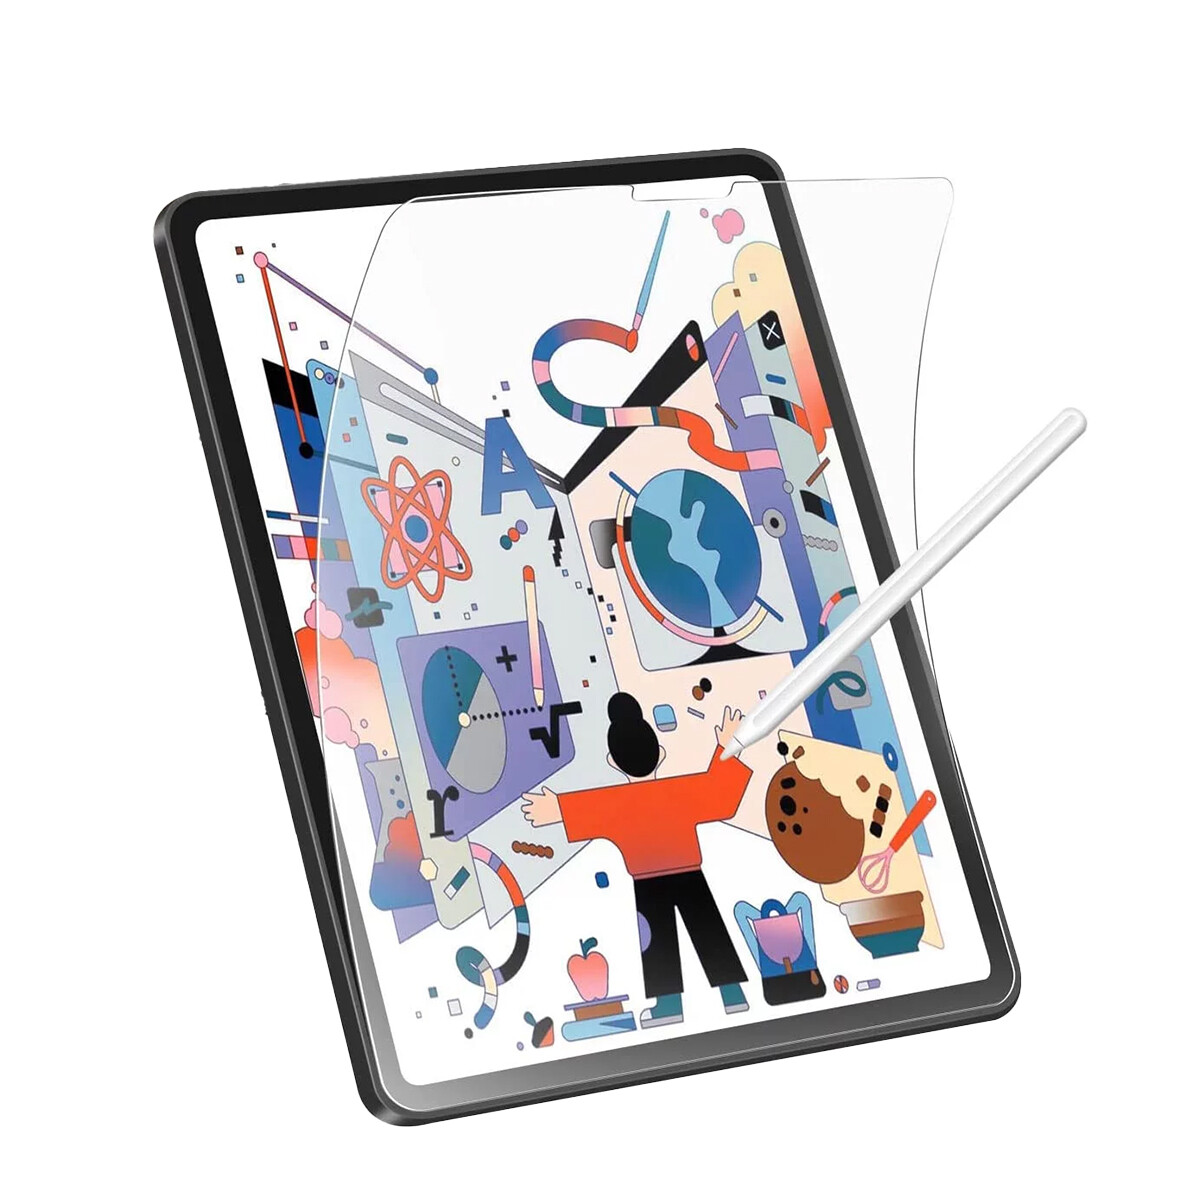 Protector de Pantalla Mate Textura Papel PaperFeel 10.9" para iPad Air 4th Generation - Transparente 